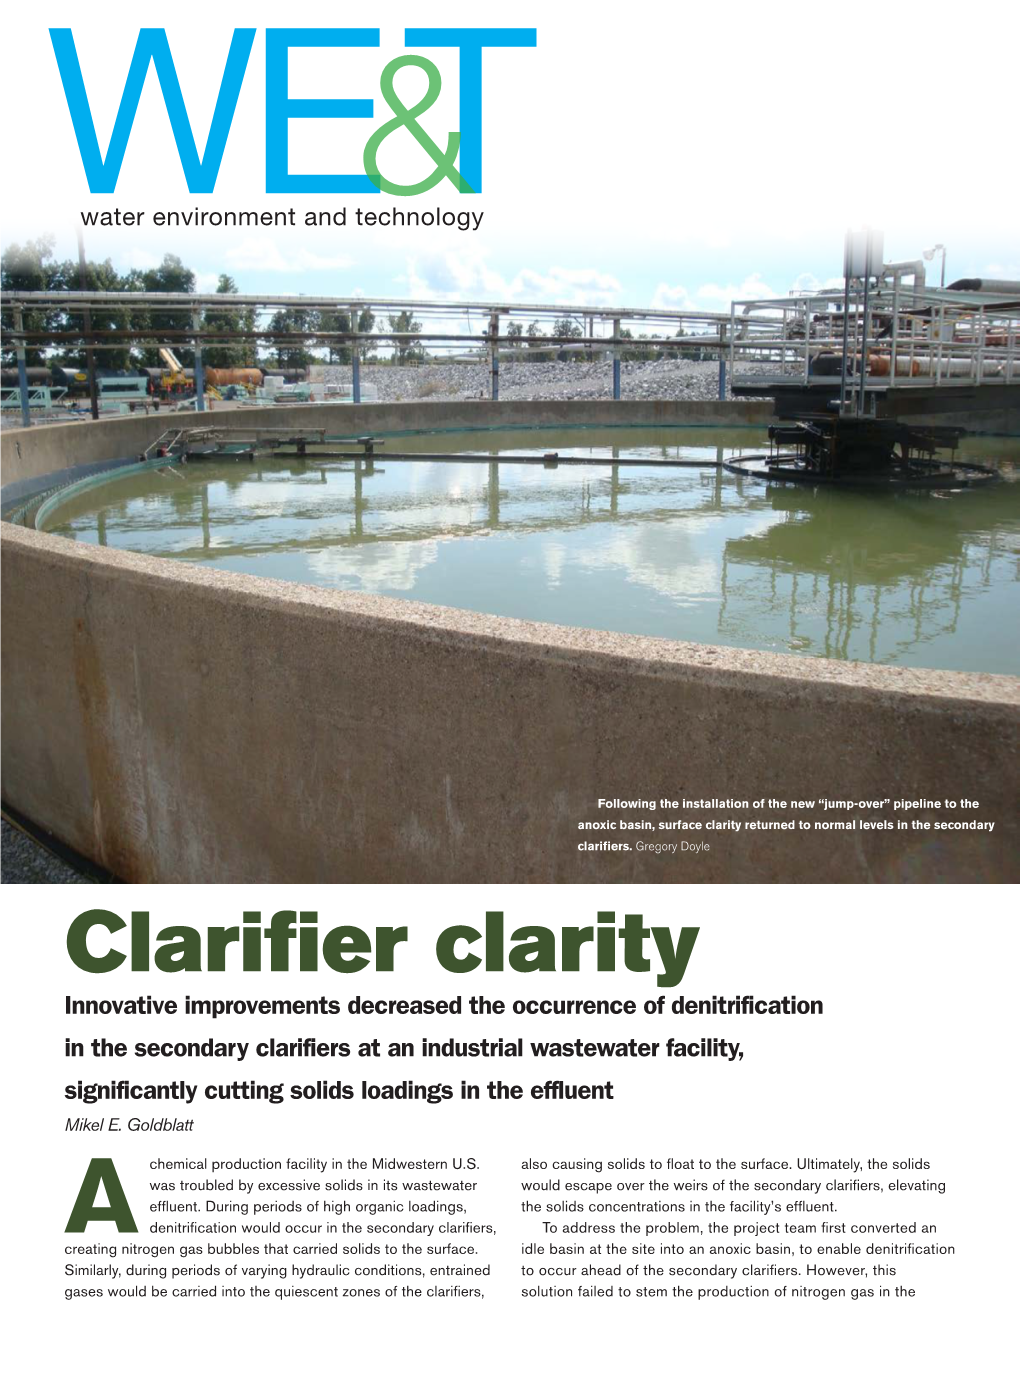 Clarifier Clarity